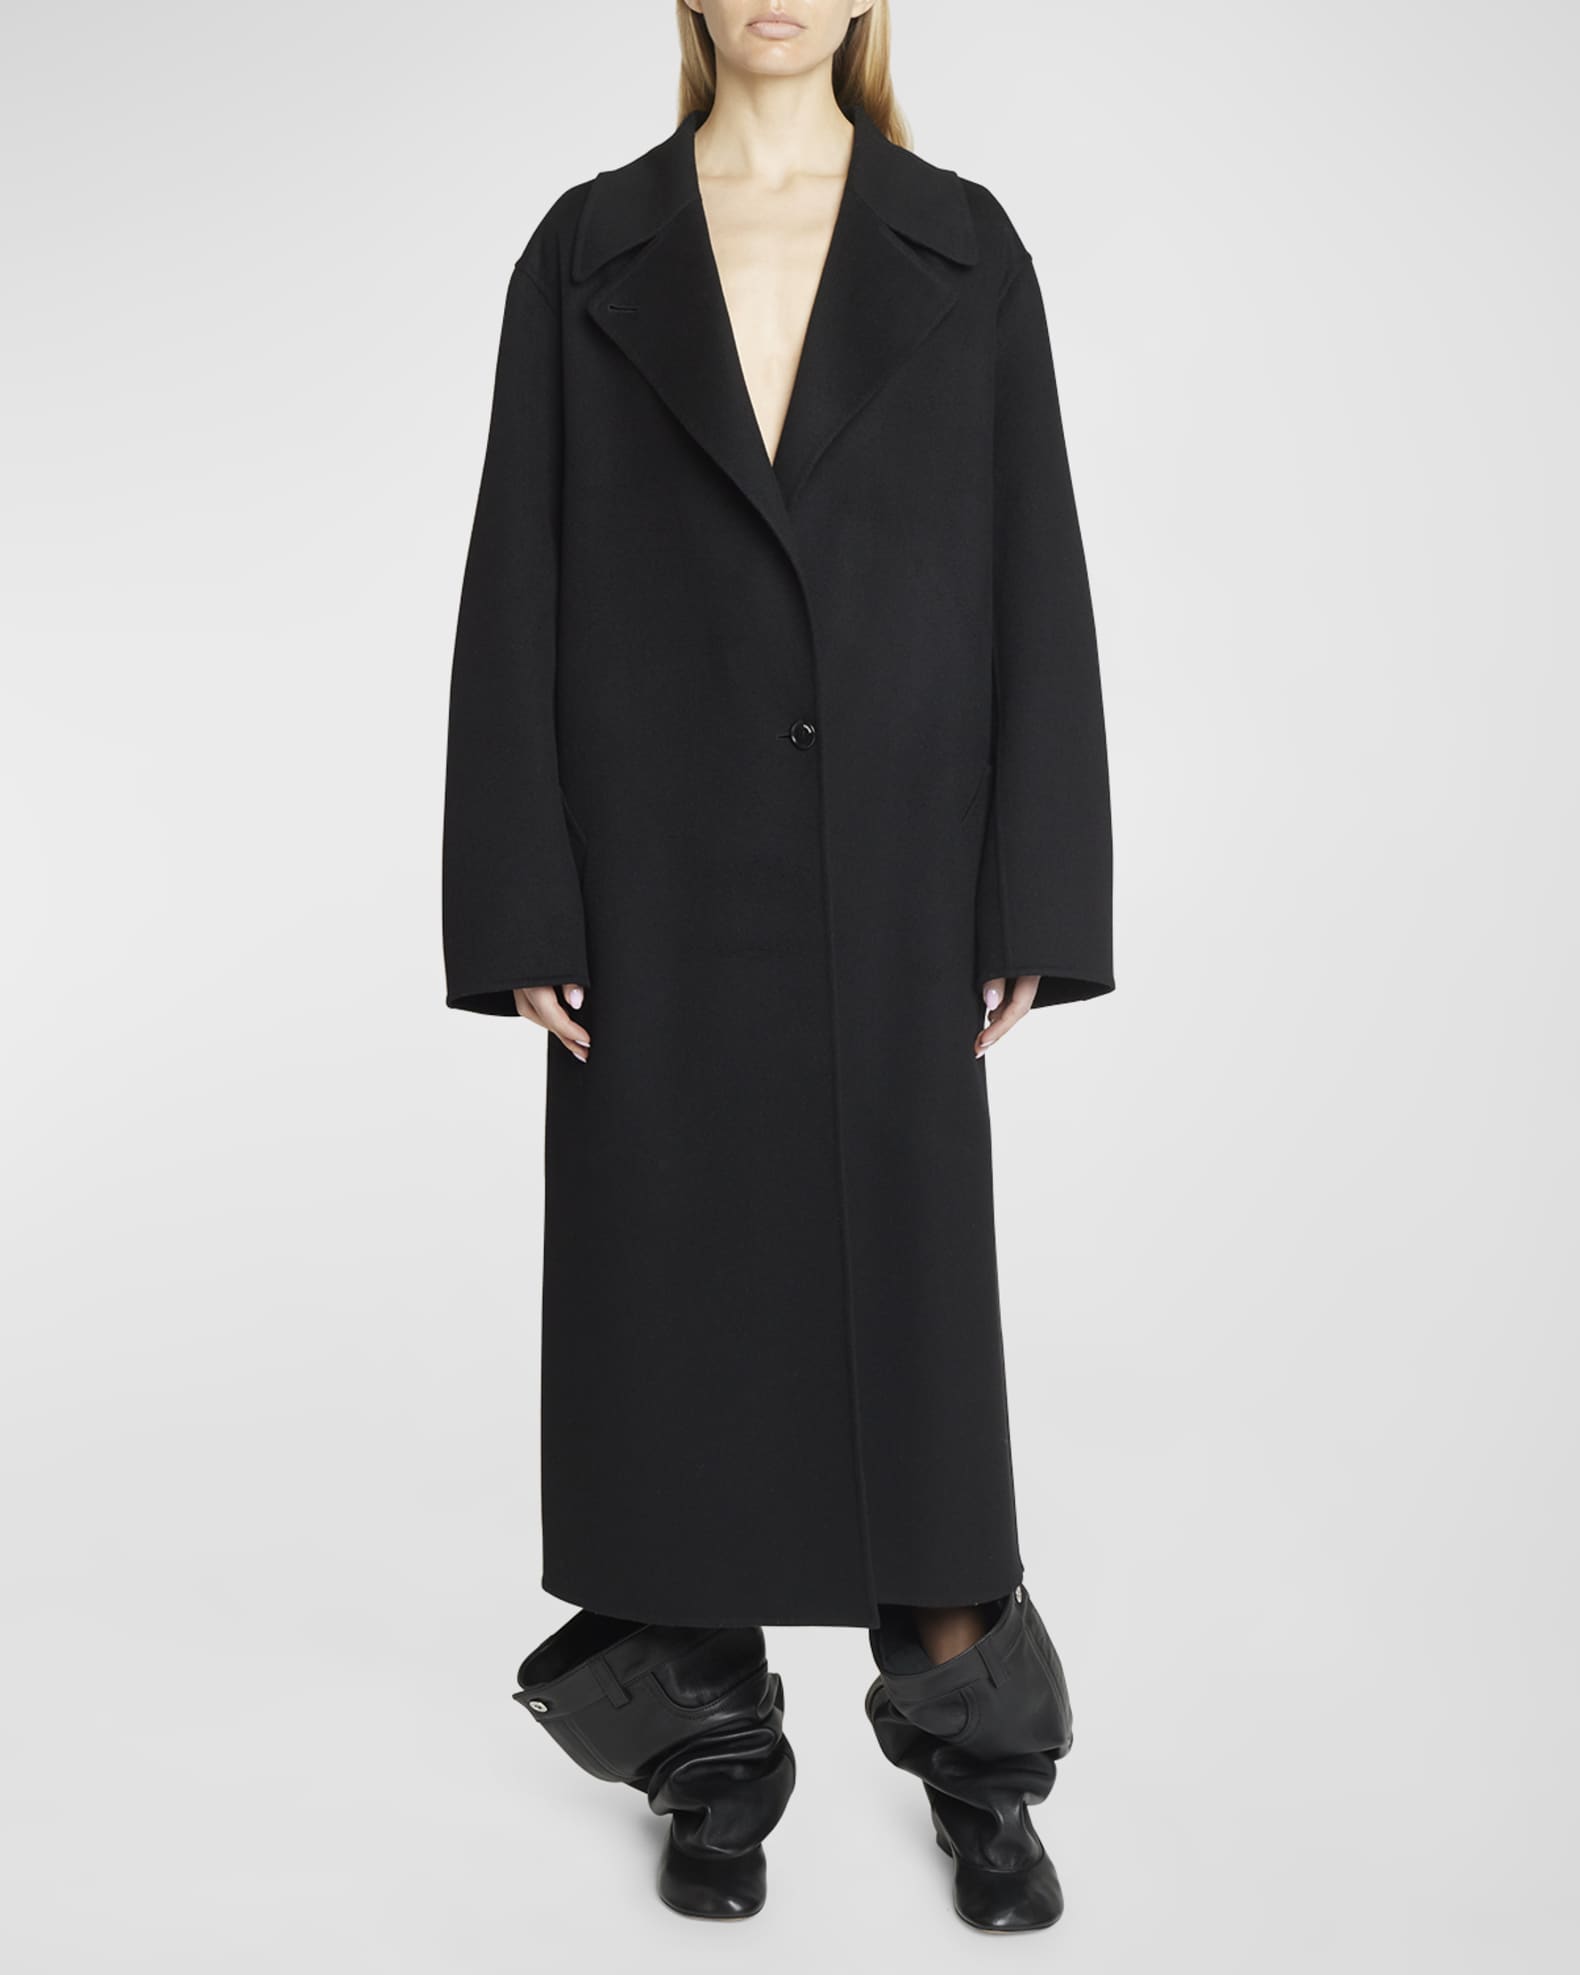 Loewe Oversized Single-Breasted Wool-Cashmere Coat | Neiman Marcus